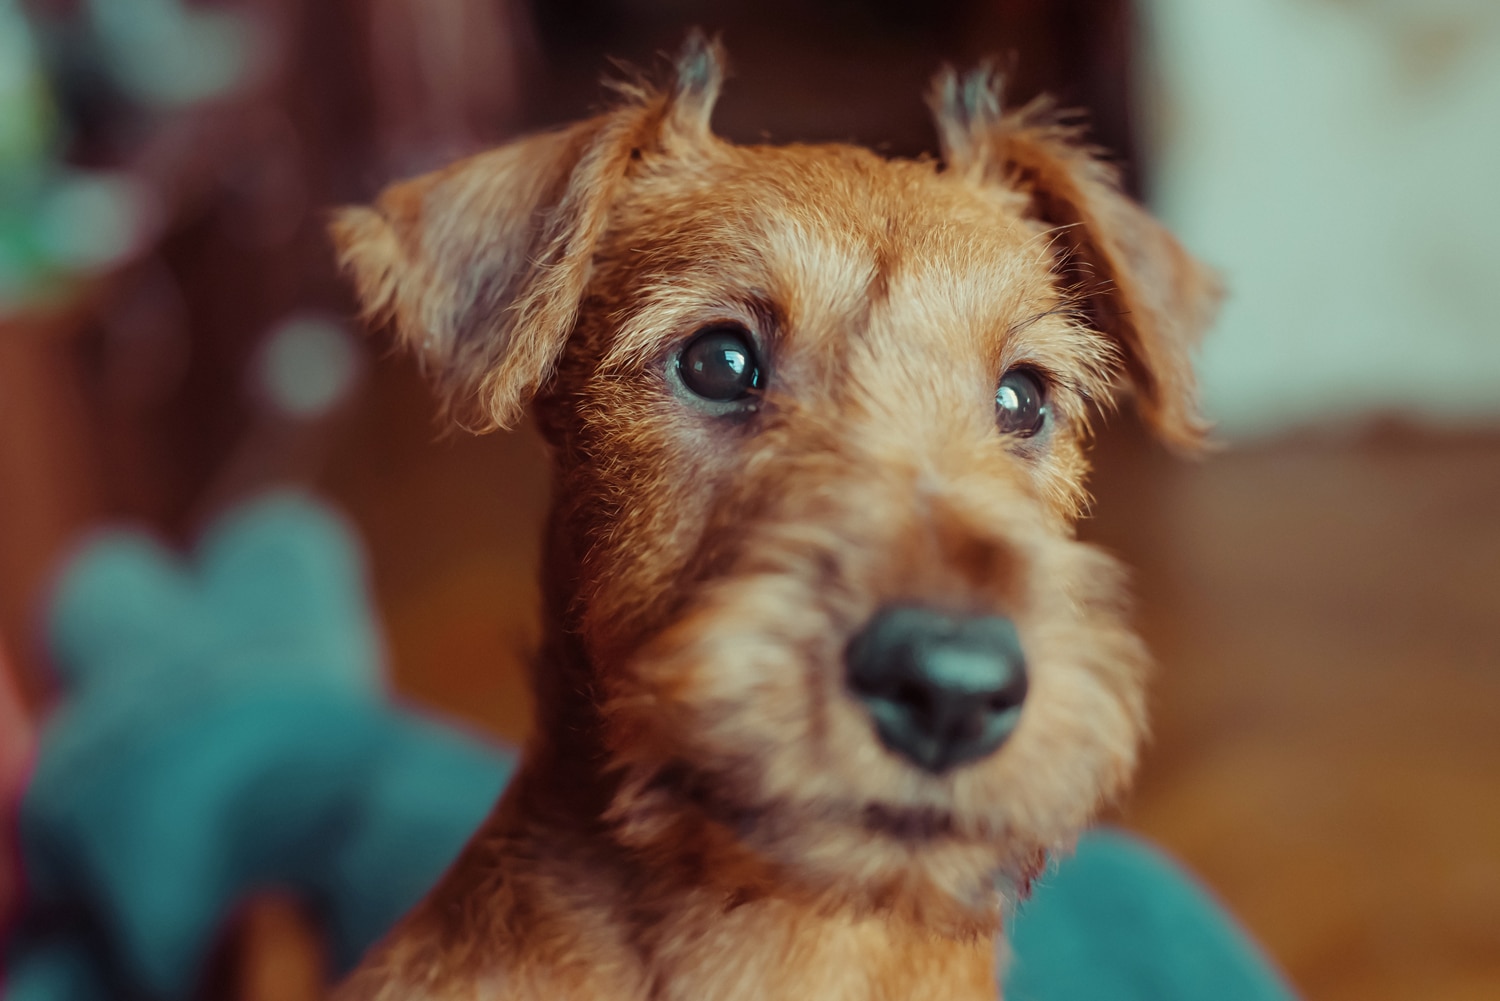 Irish Terrier puppy's face up close